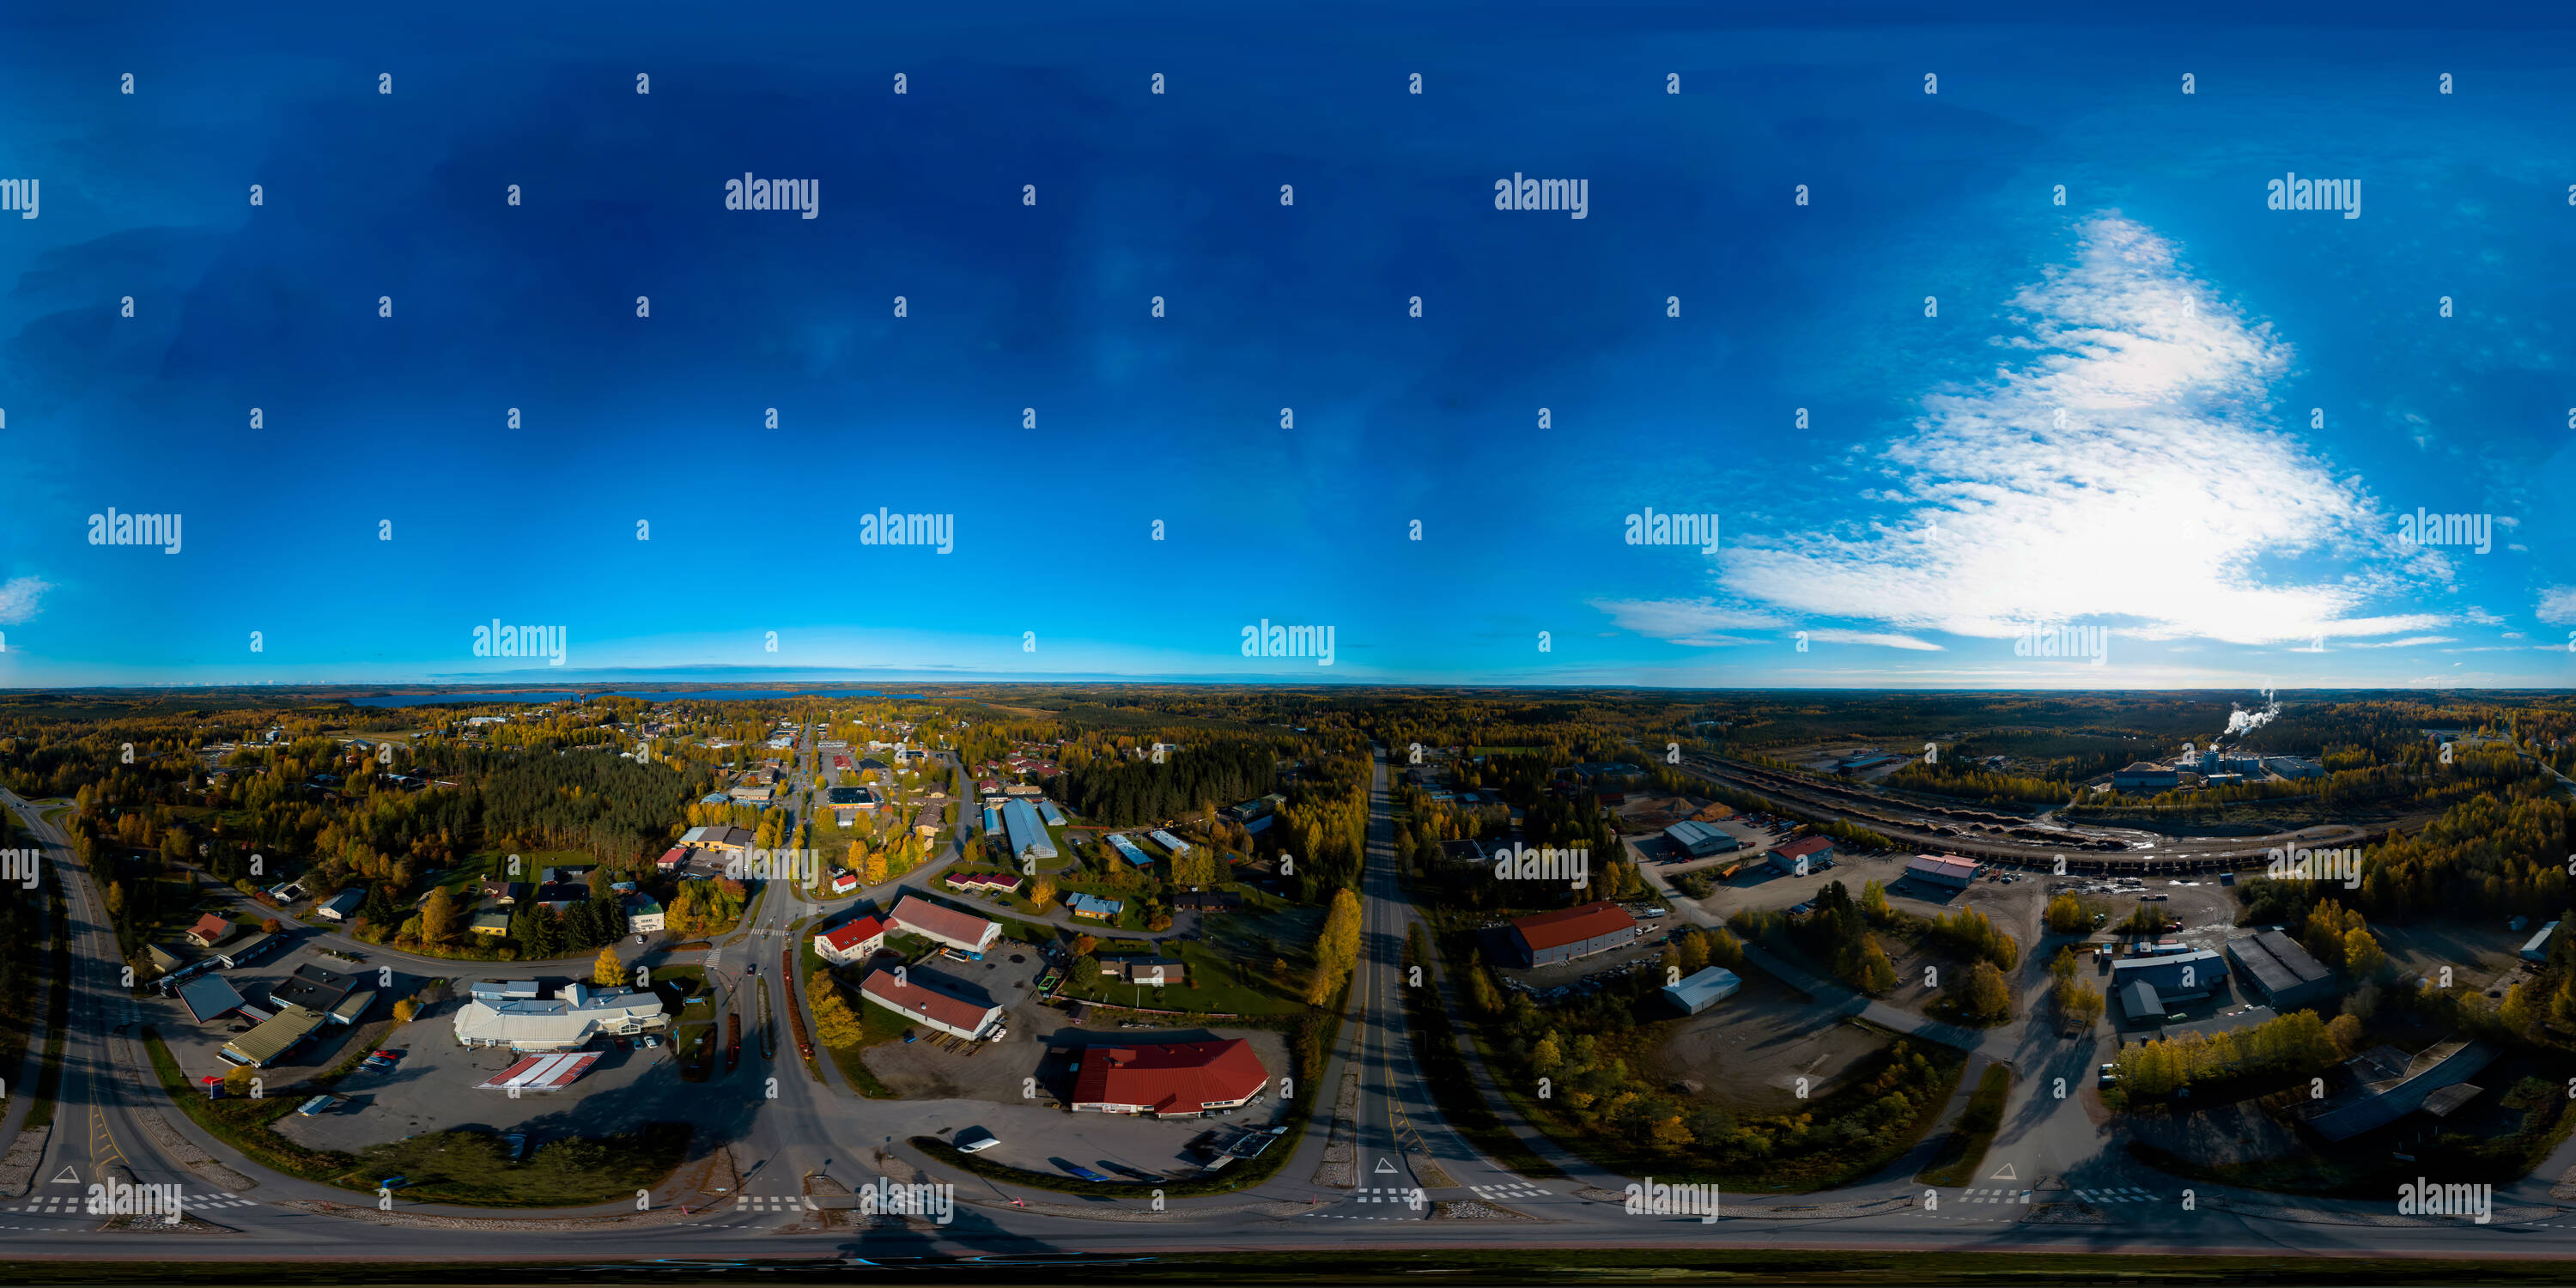 360 degree panoramic view of Aerial 360 photo from Ilomantsi